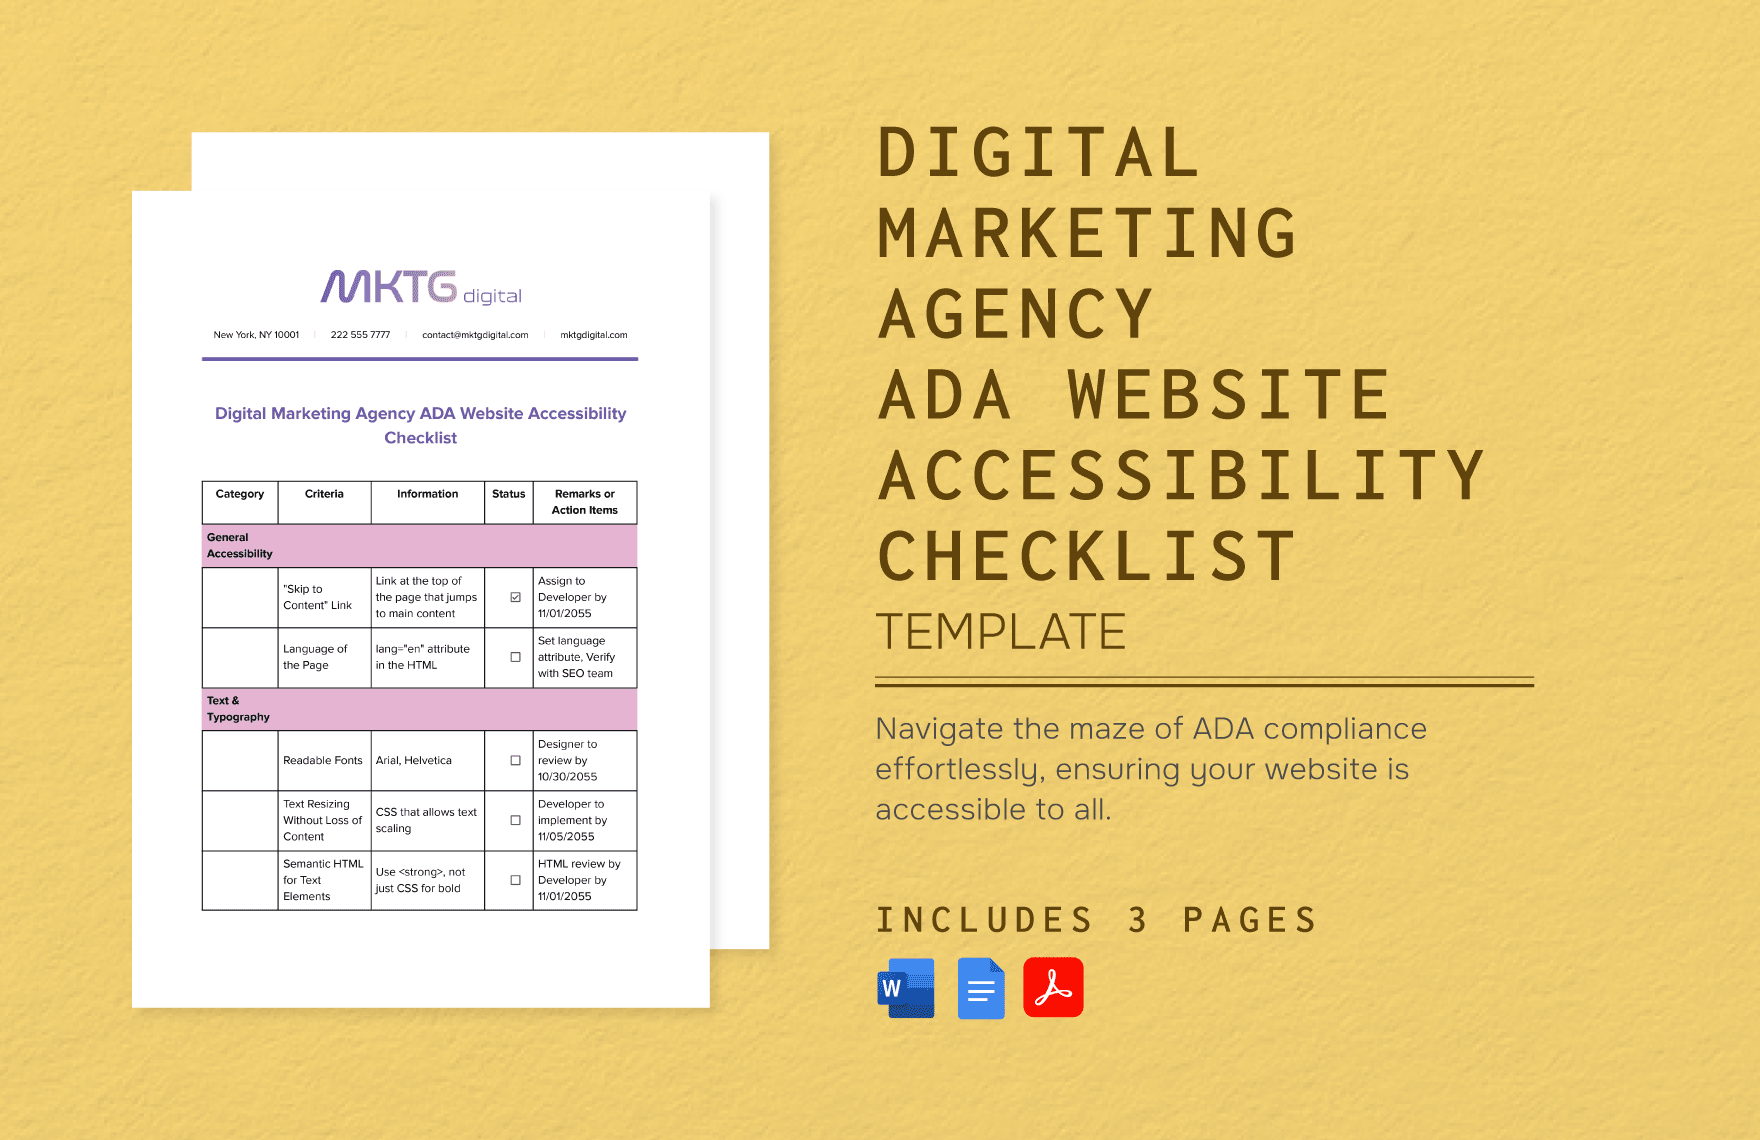 Digital Marketing Agency ADA Website Accessibility Checklist Template